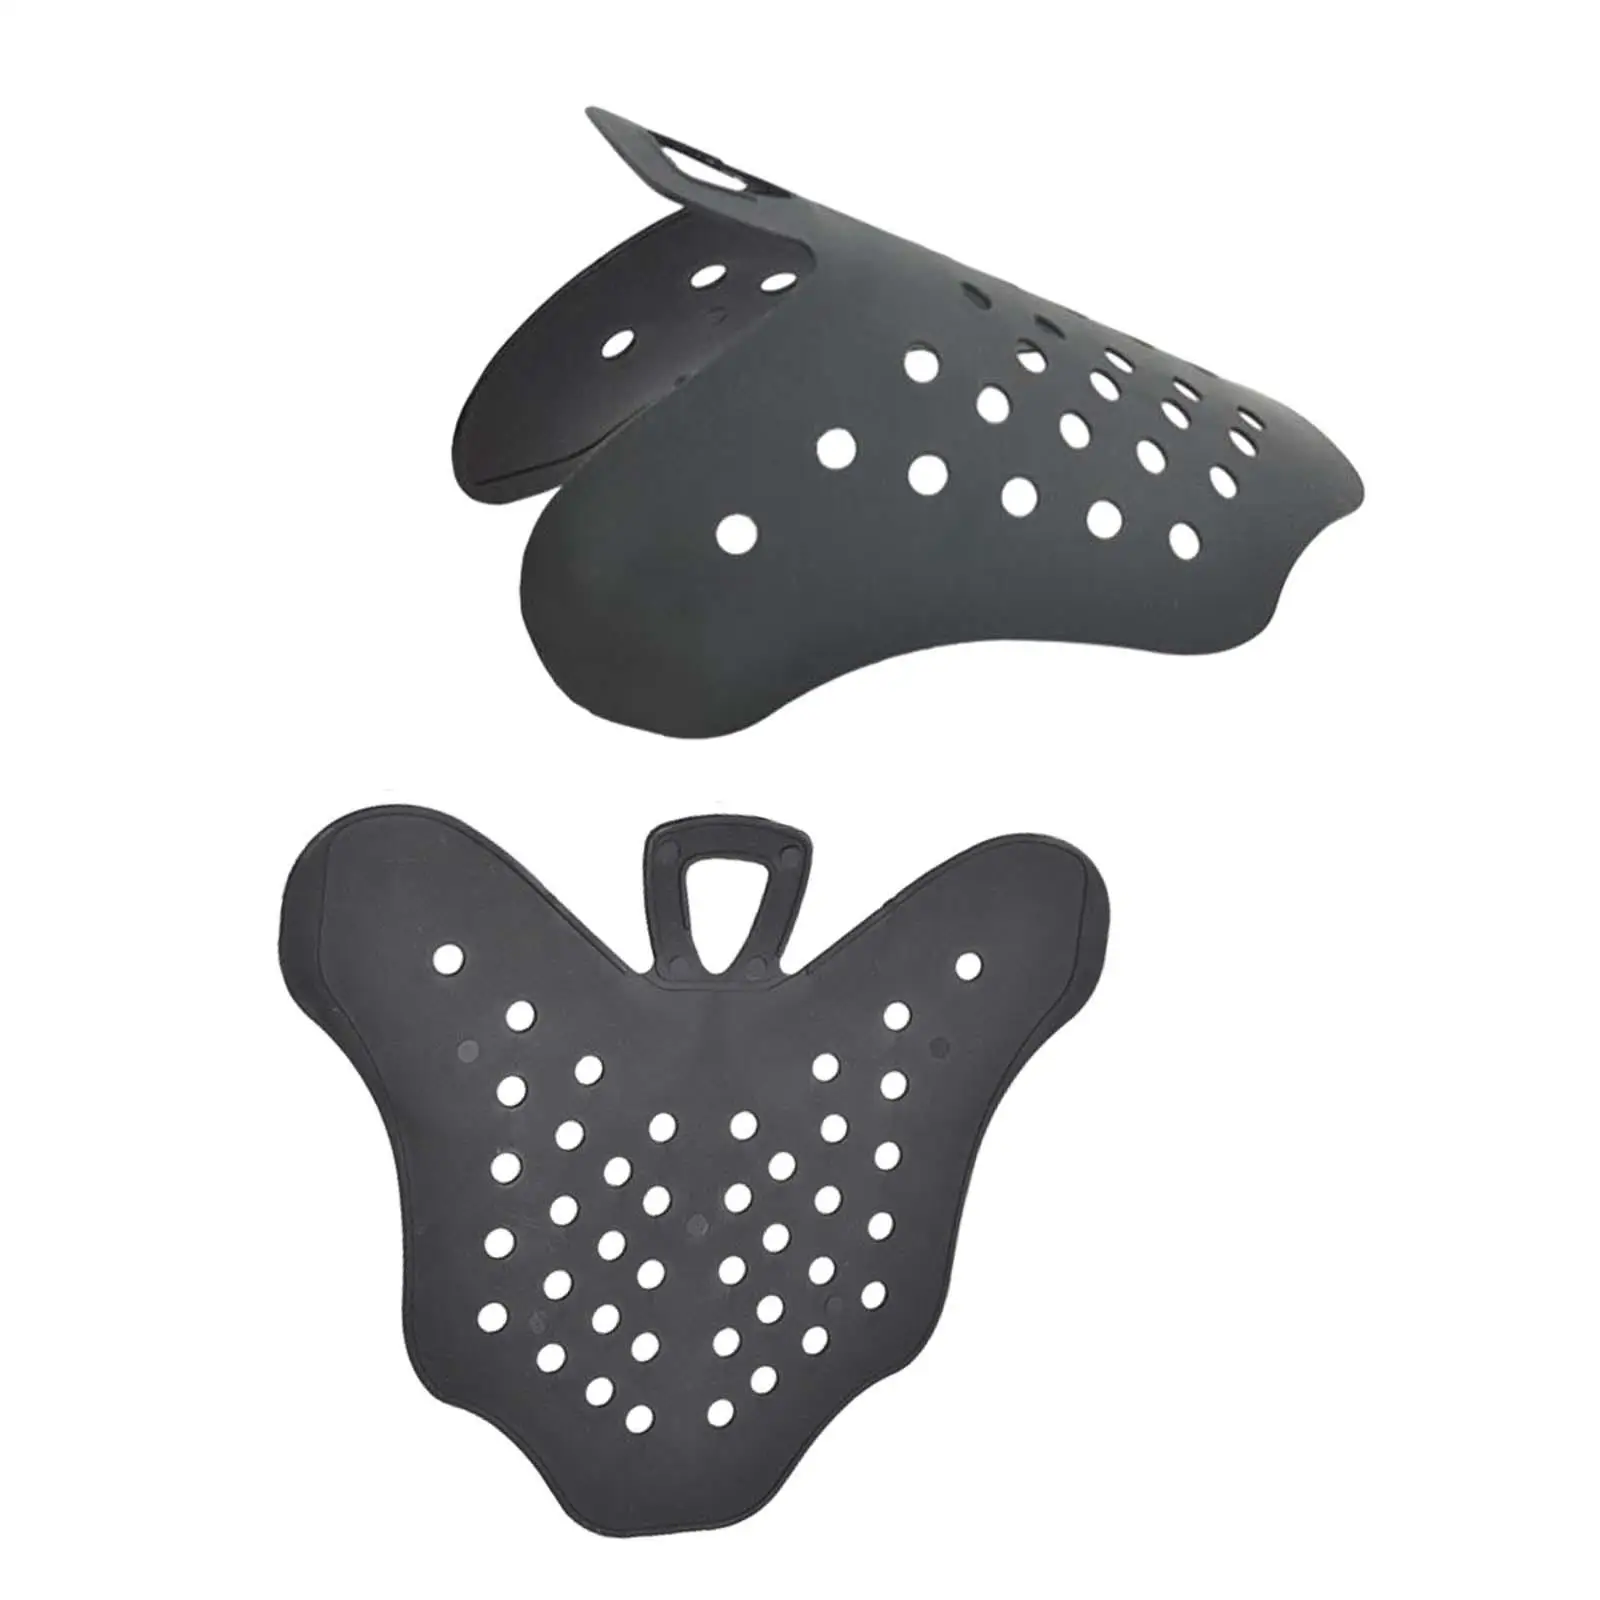 Flip Fin Snorkel Fins Diving Fins Shoes Support for Sports Adult